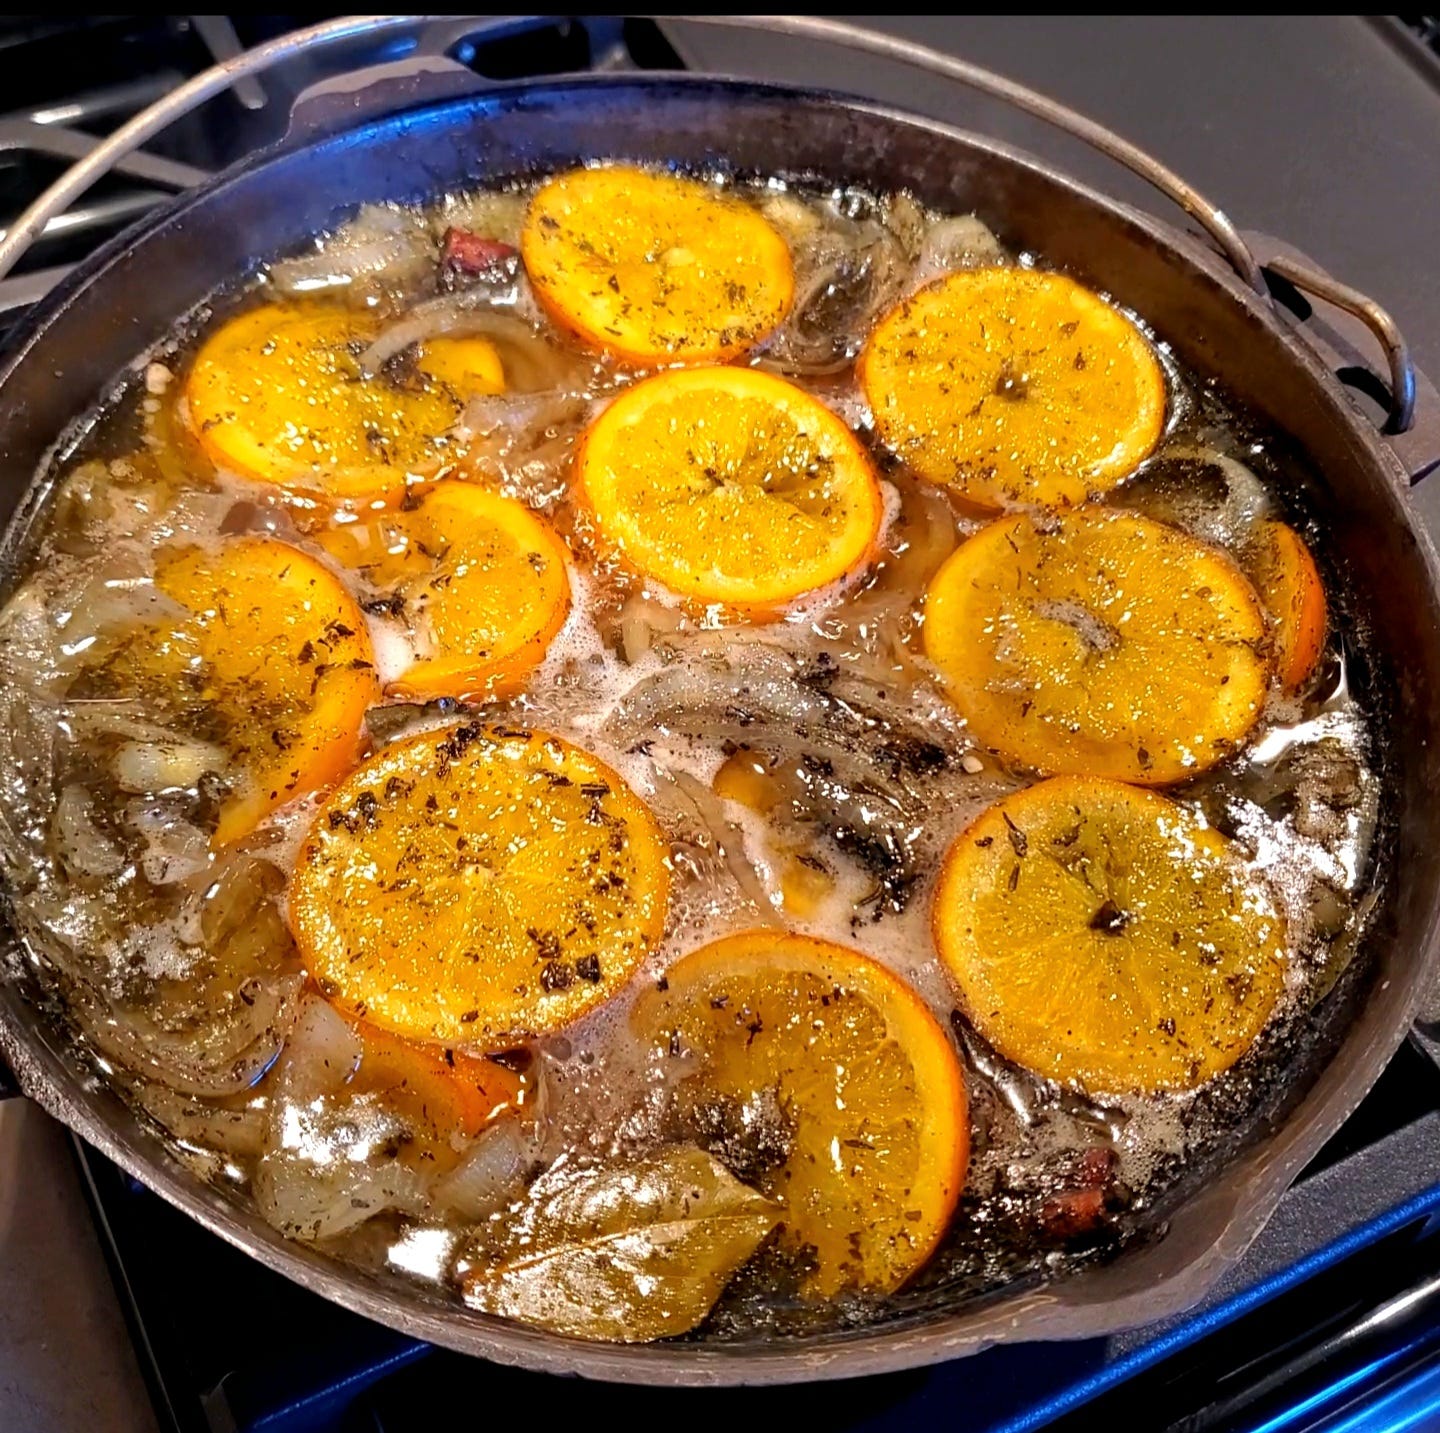 Pheasant carnitas on the stove